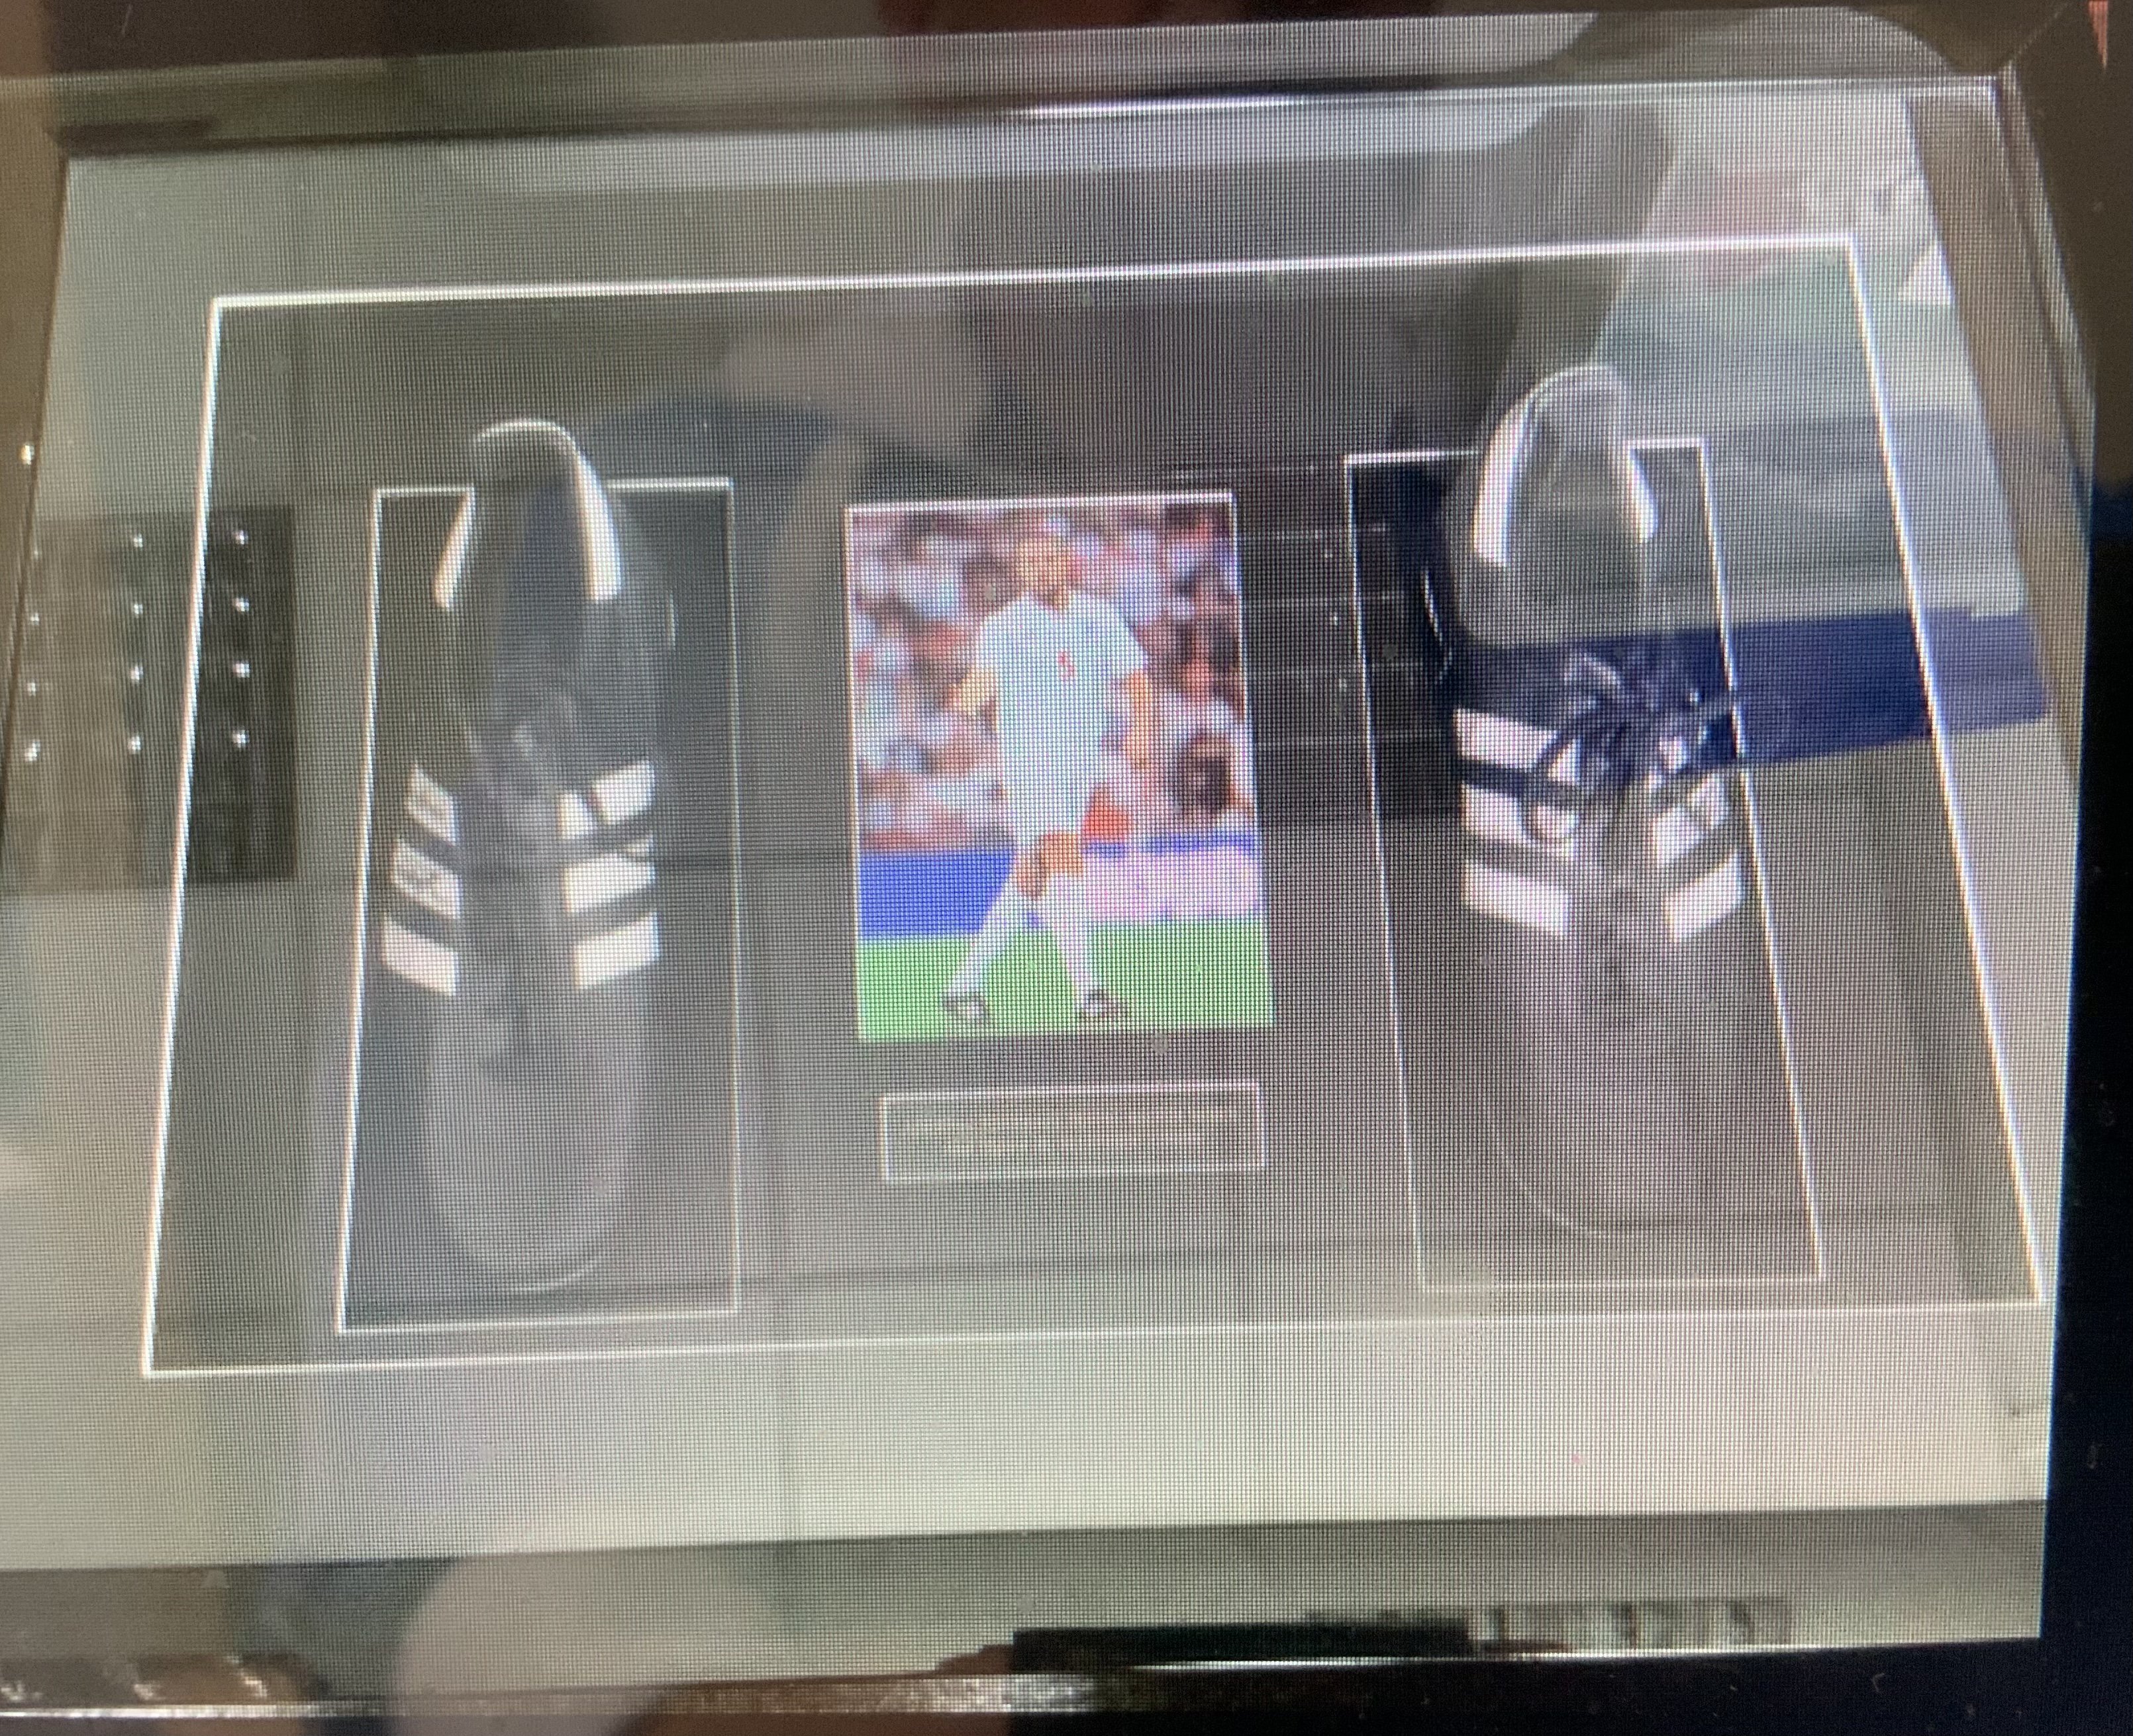 Matthew Upson England Match Worn Football Boots: Worn by Upson around 2010. Expensively framed in